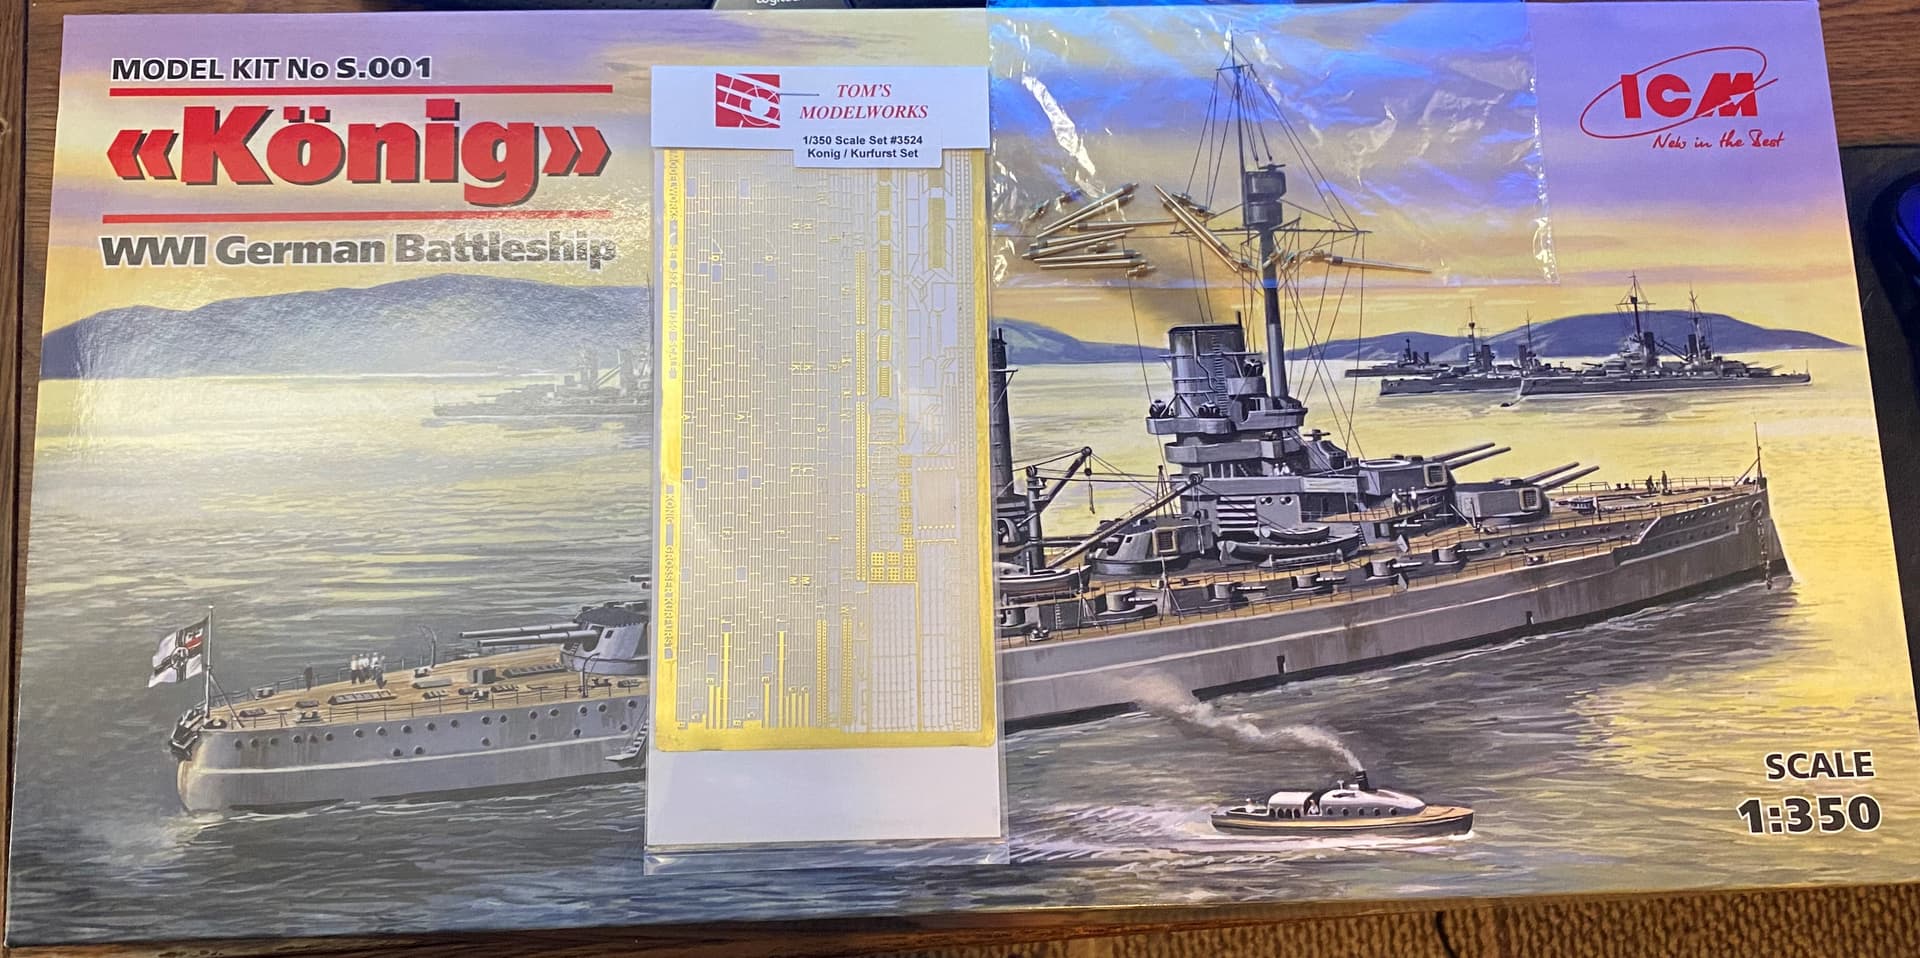 Plastic Model Building Kit # S.001 ICM 1/350 Scale König WWI German Battleship 